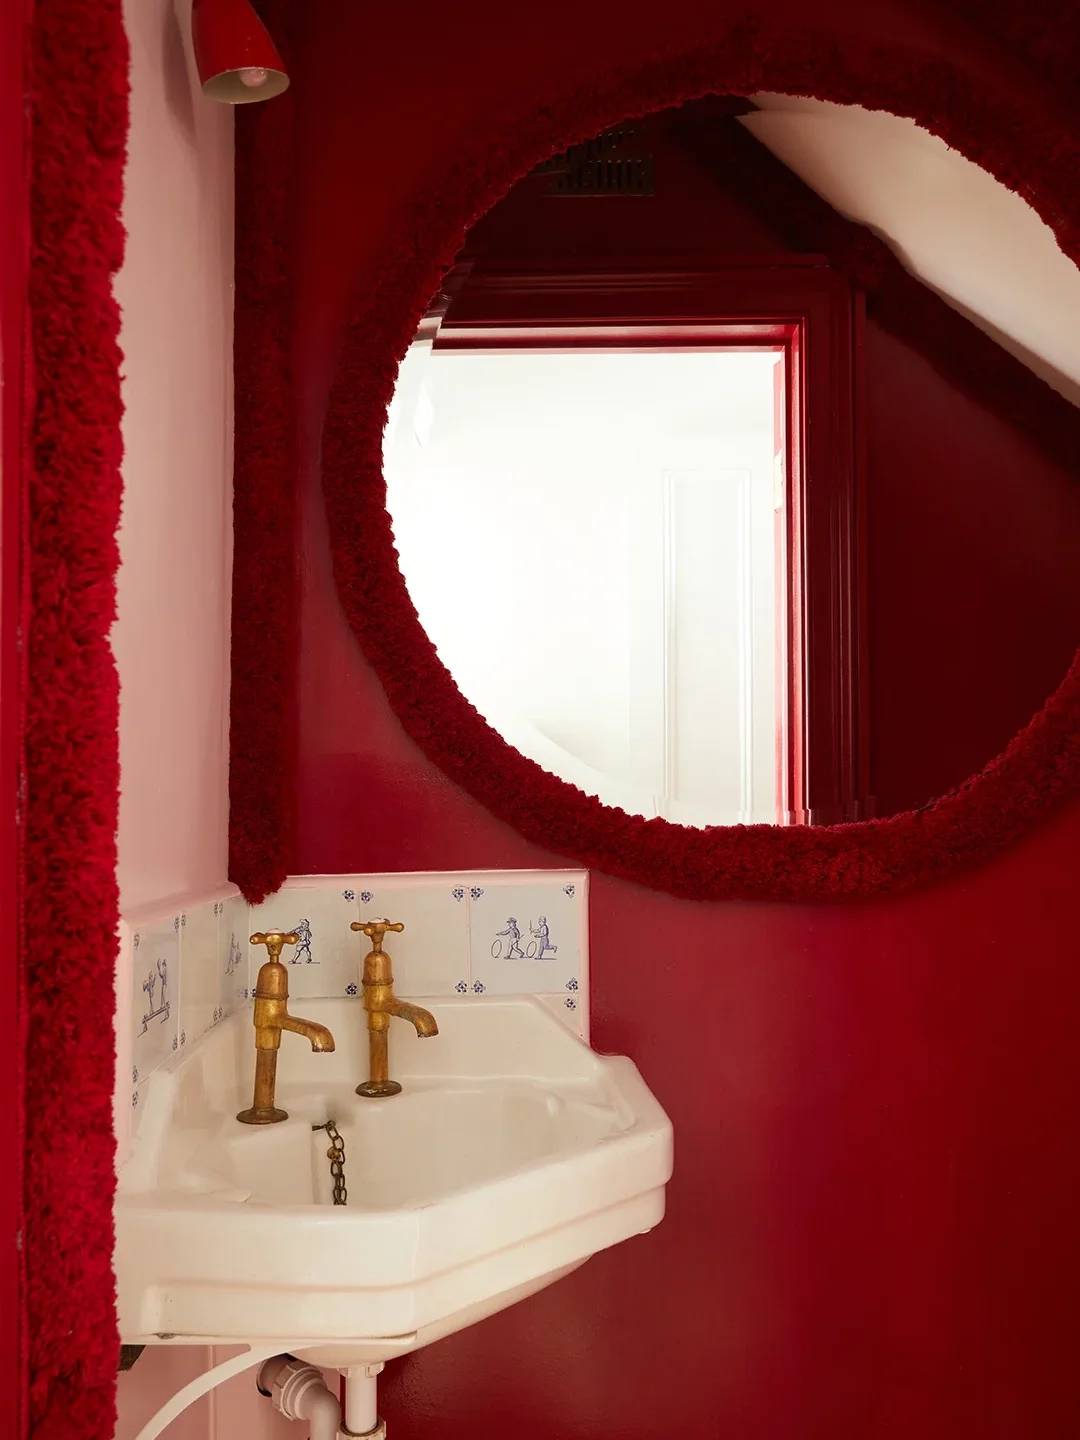 All-crimson red powder room with round mirror.